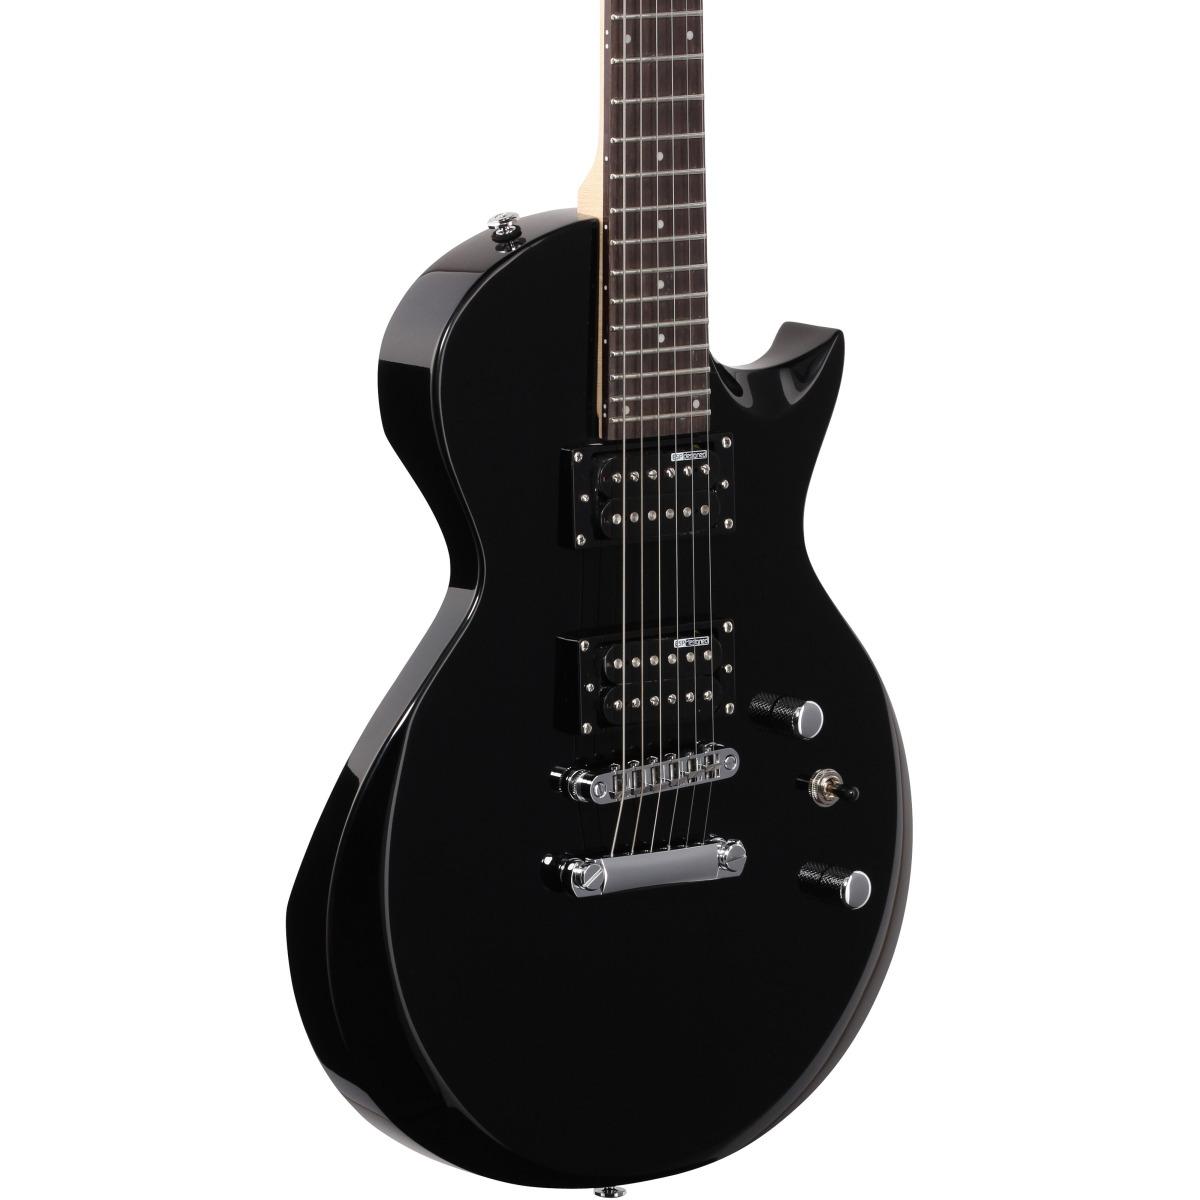 Esp Ltd Ec10 Black chitarra elettrica con borsa